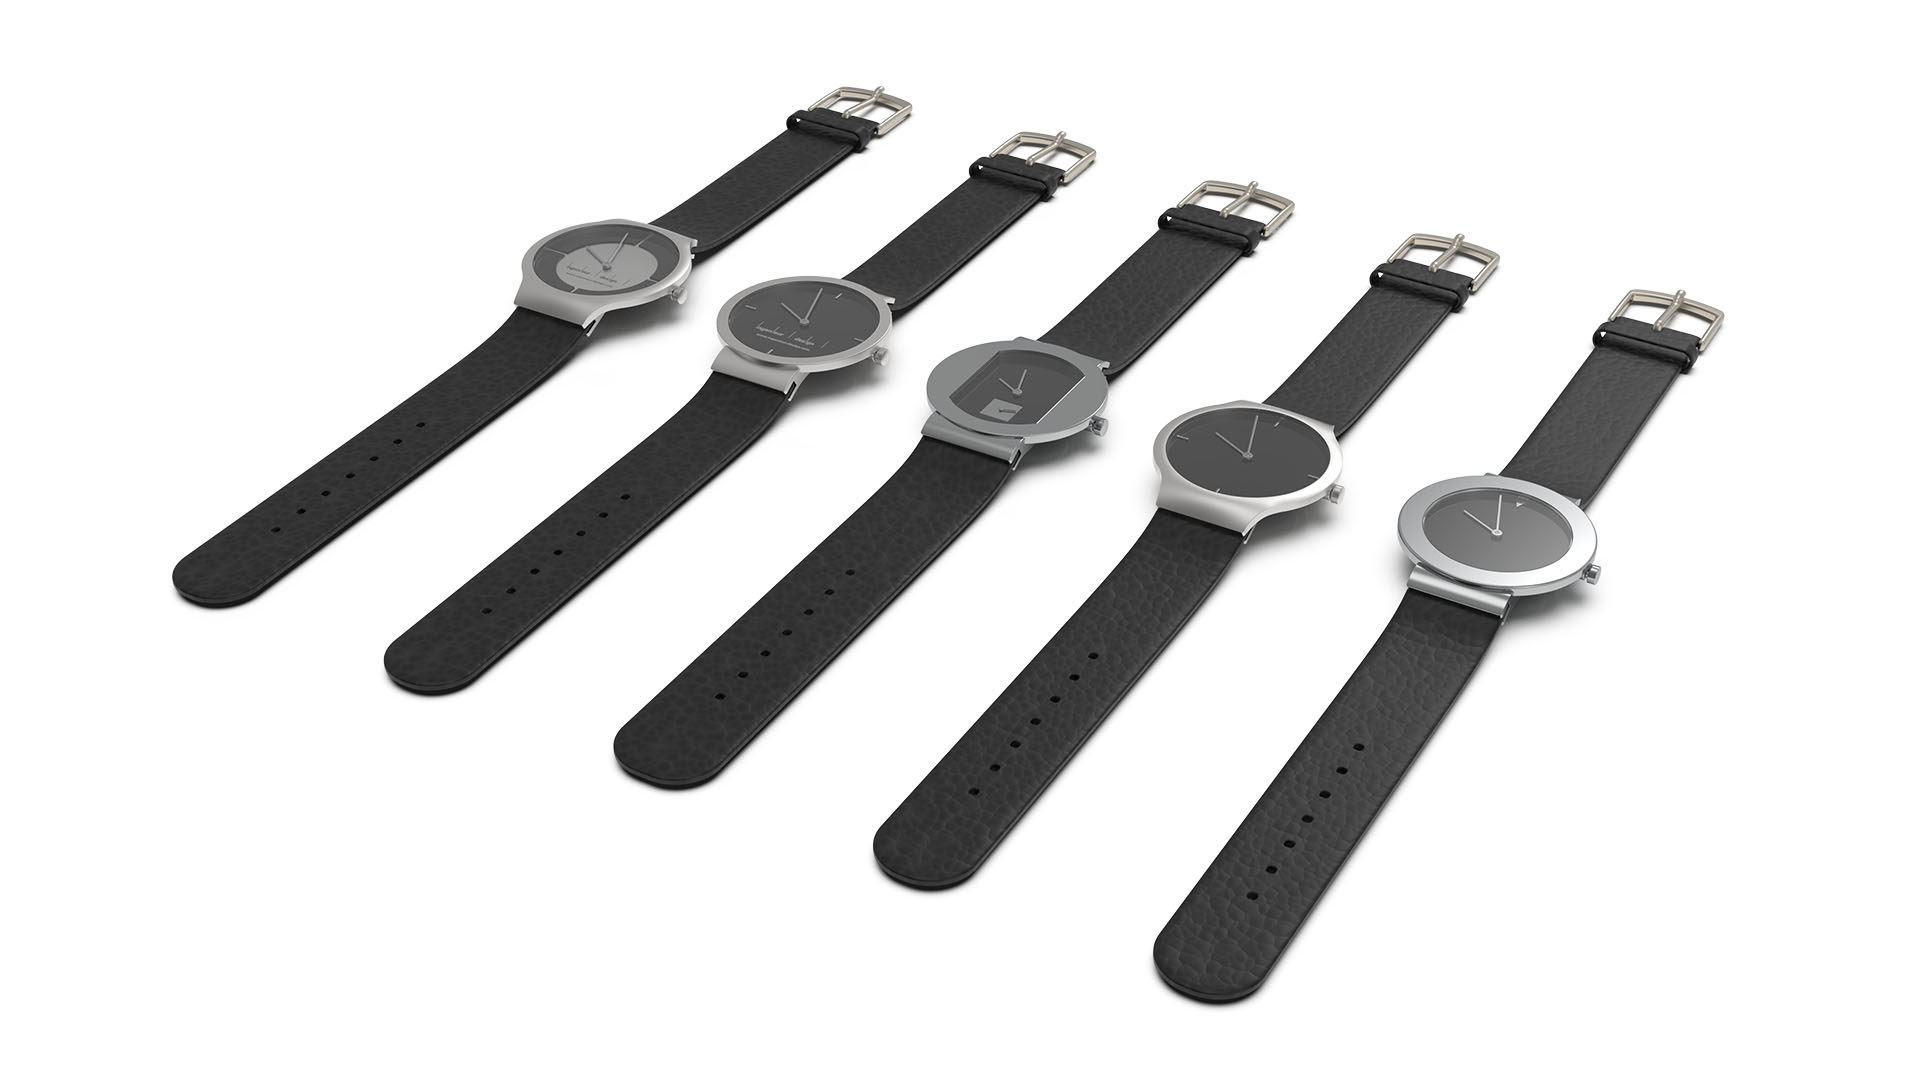 Armbanduhren-Serie - 
Industrial Design für Protrade Europe